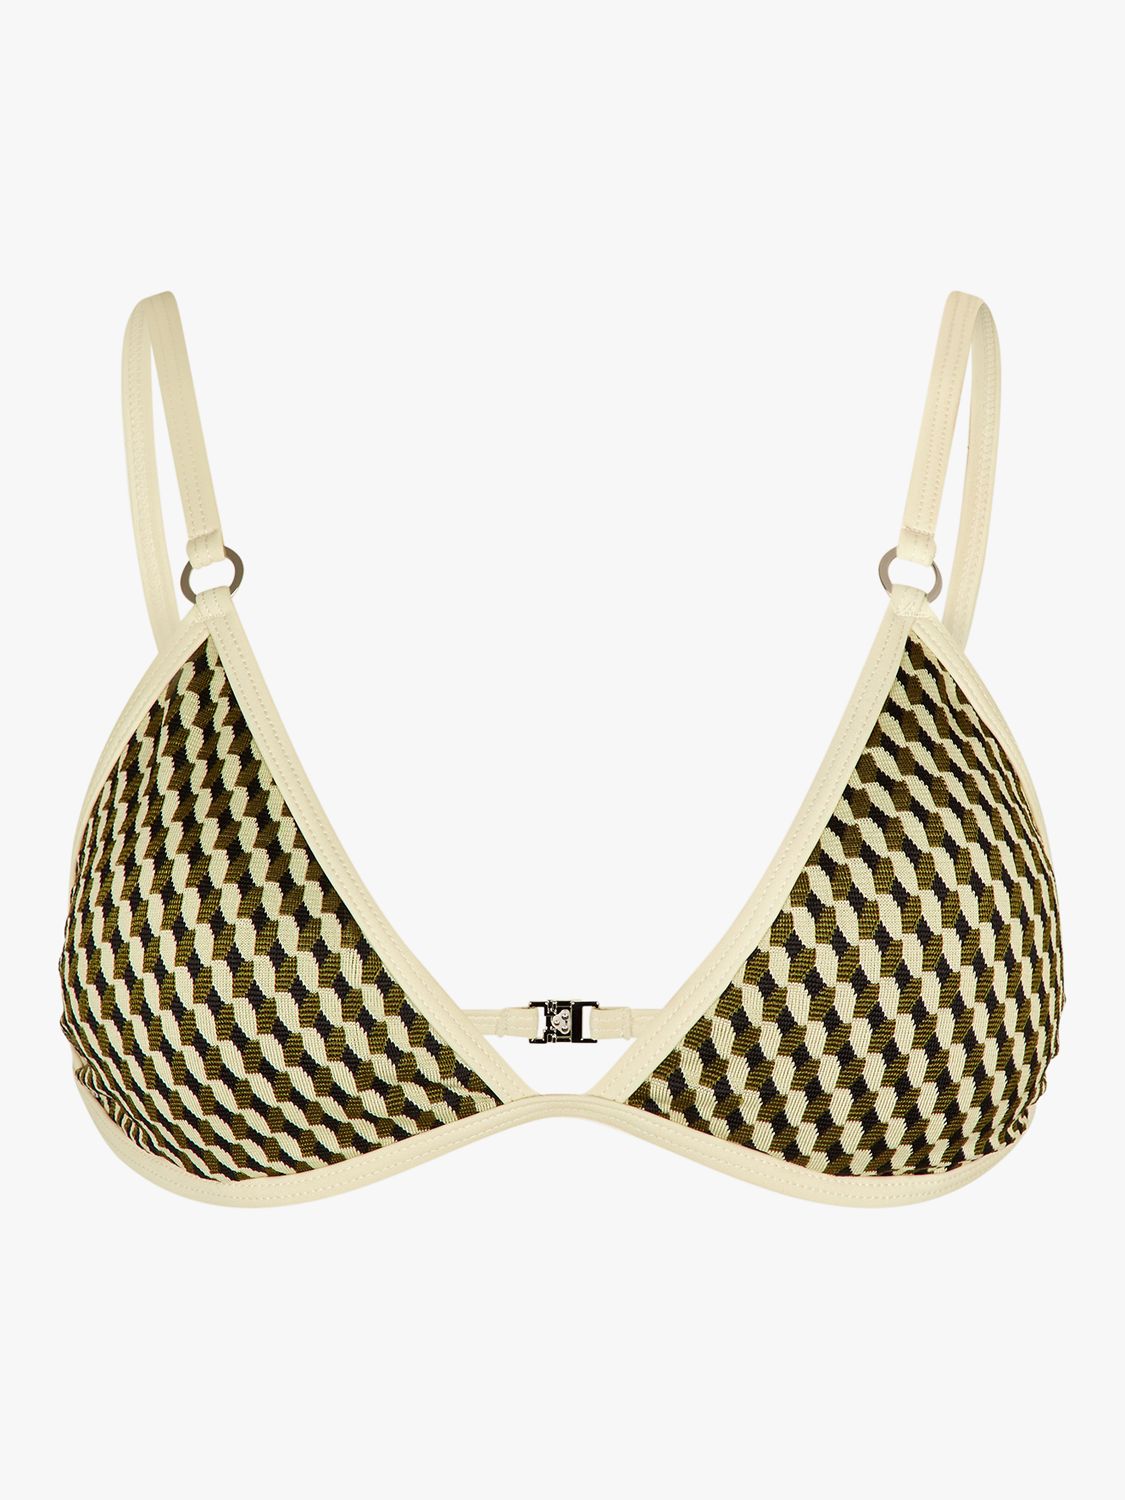 Accessorize Jacquard Skimpy Triangle Bikini Top, Multi, 6